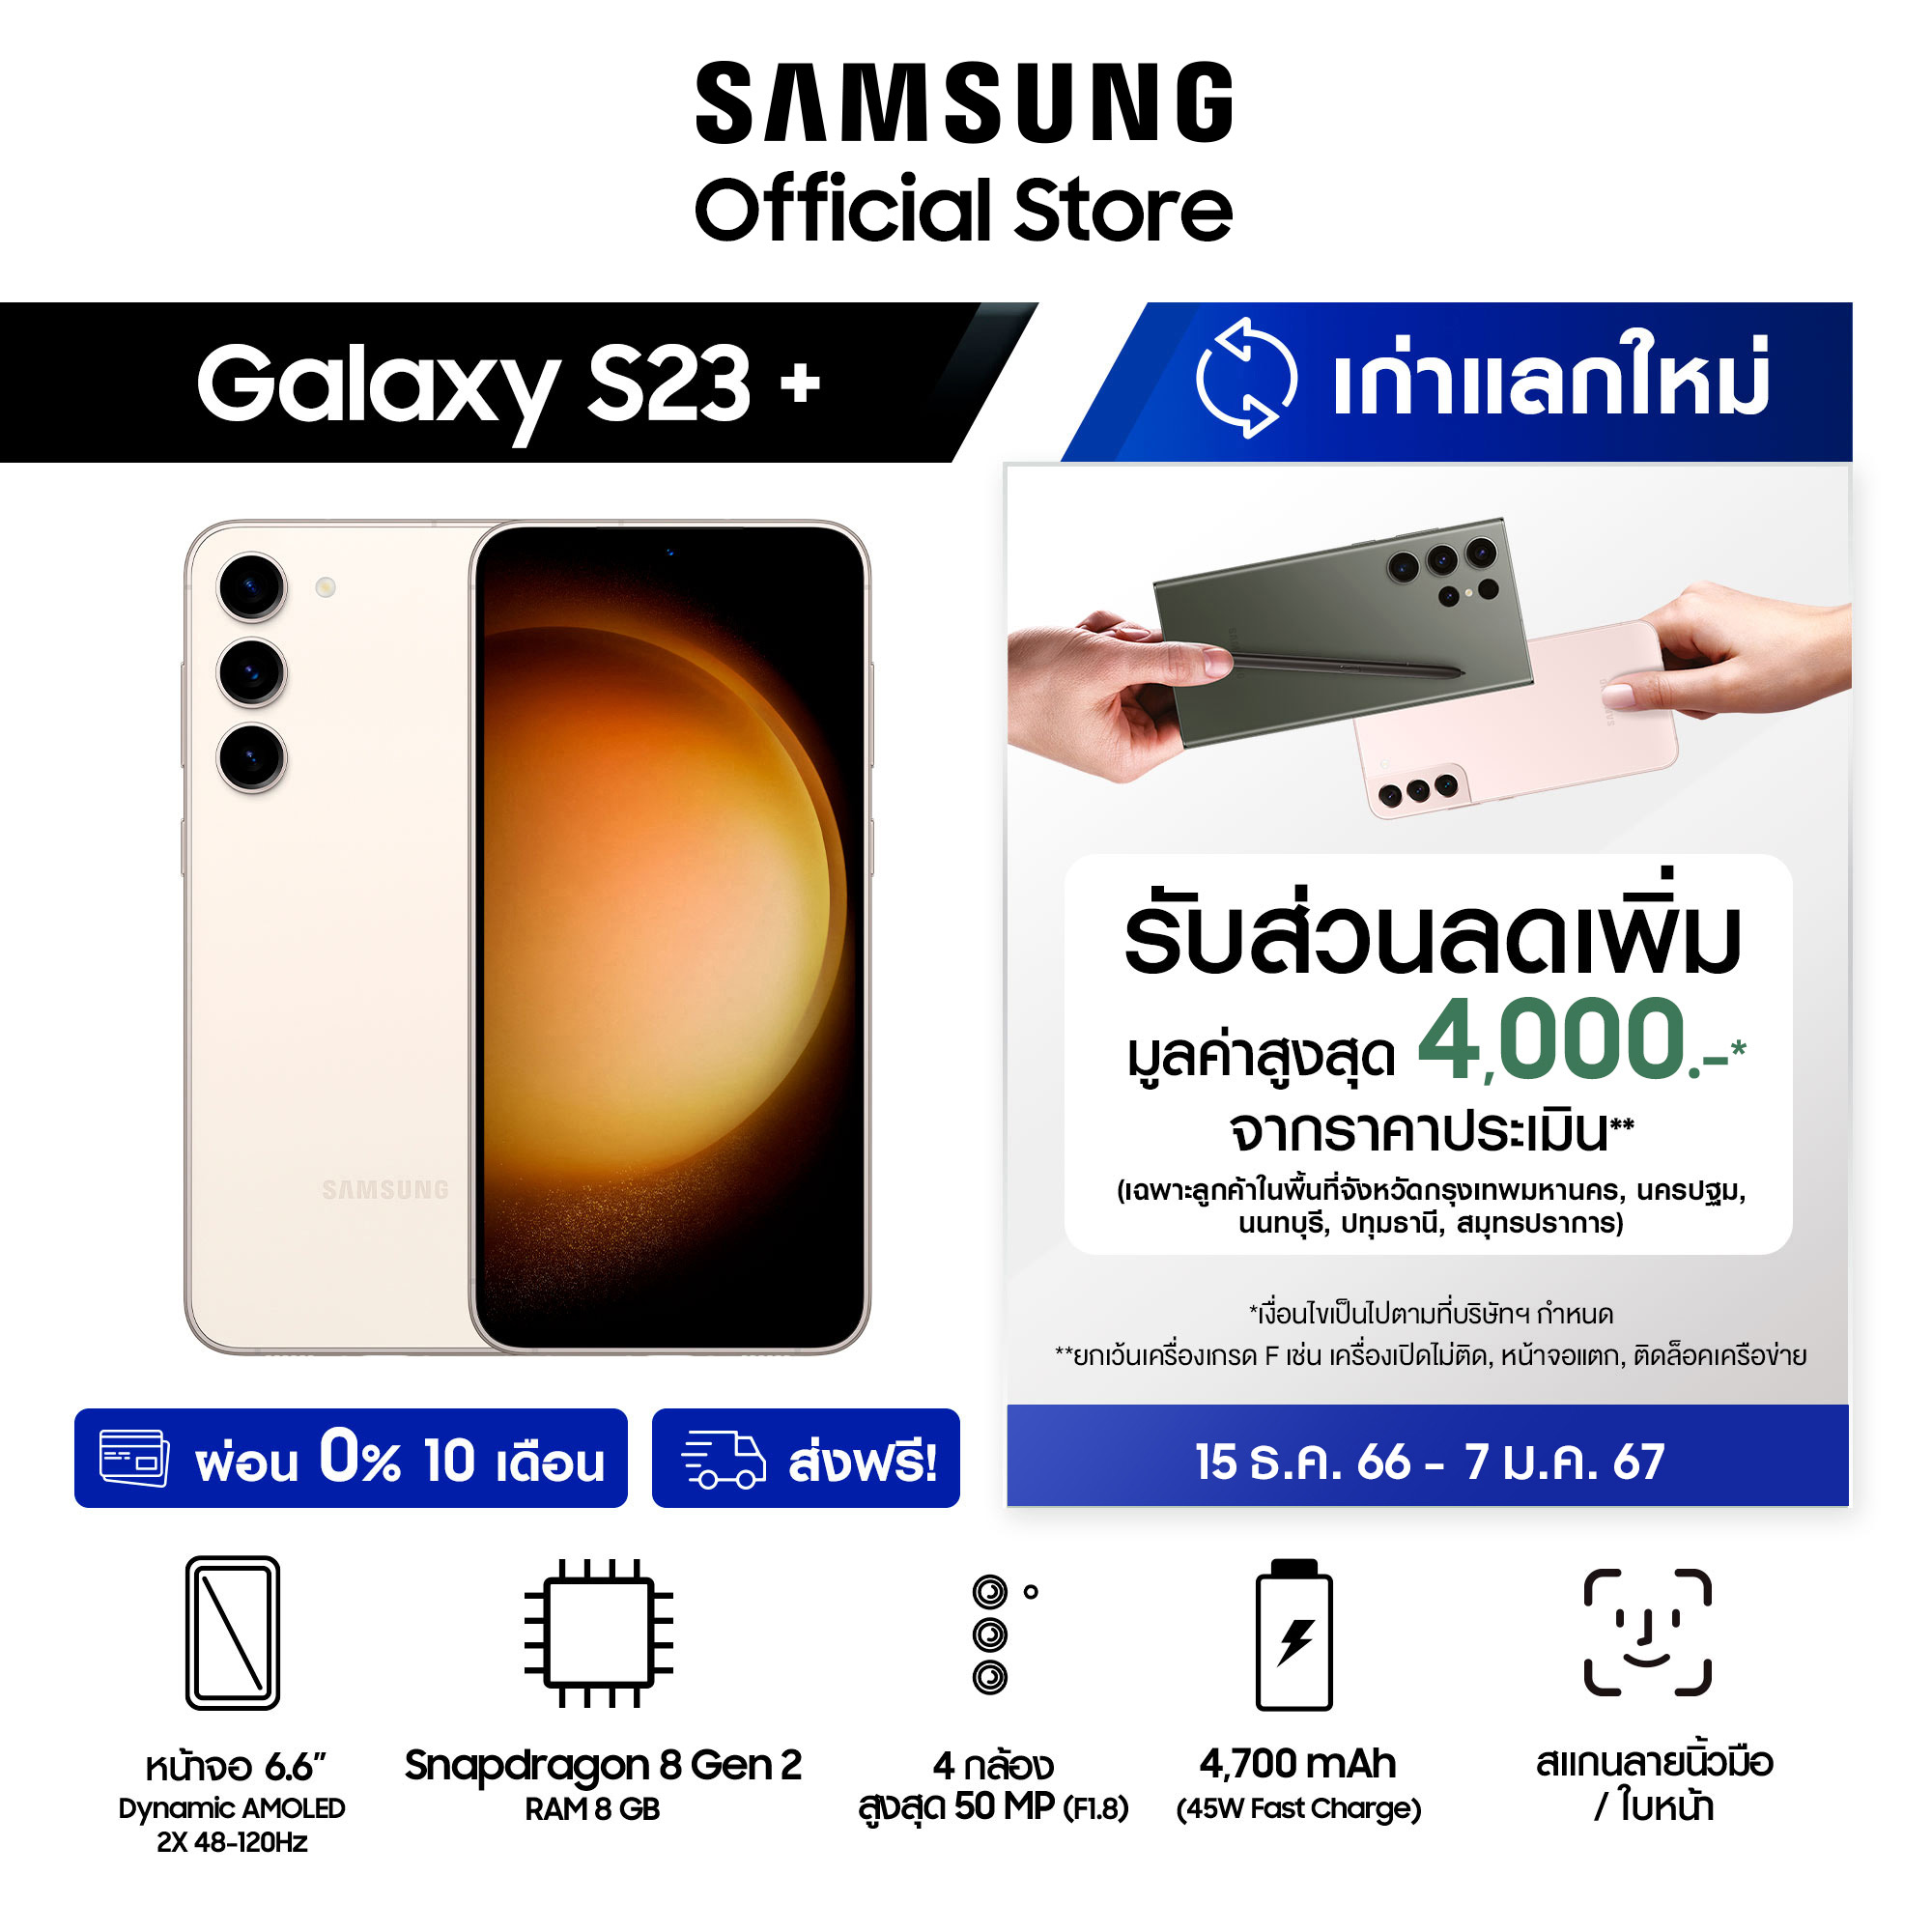 Samsung Galaxy A54 5G สมาร์ทโฟน หน้าจอ 6.4 นิ้ว Exynos 1380 Octa Core ราคา  13,999 บาท - สยามโฟน.คอม